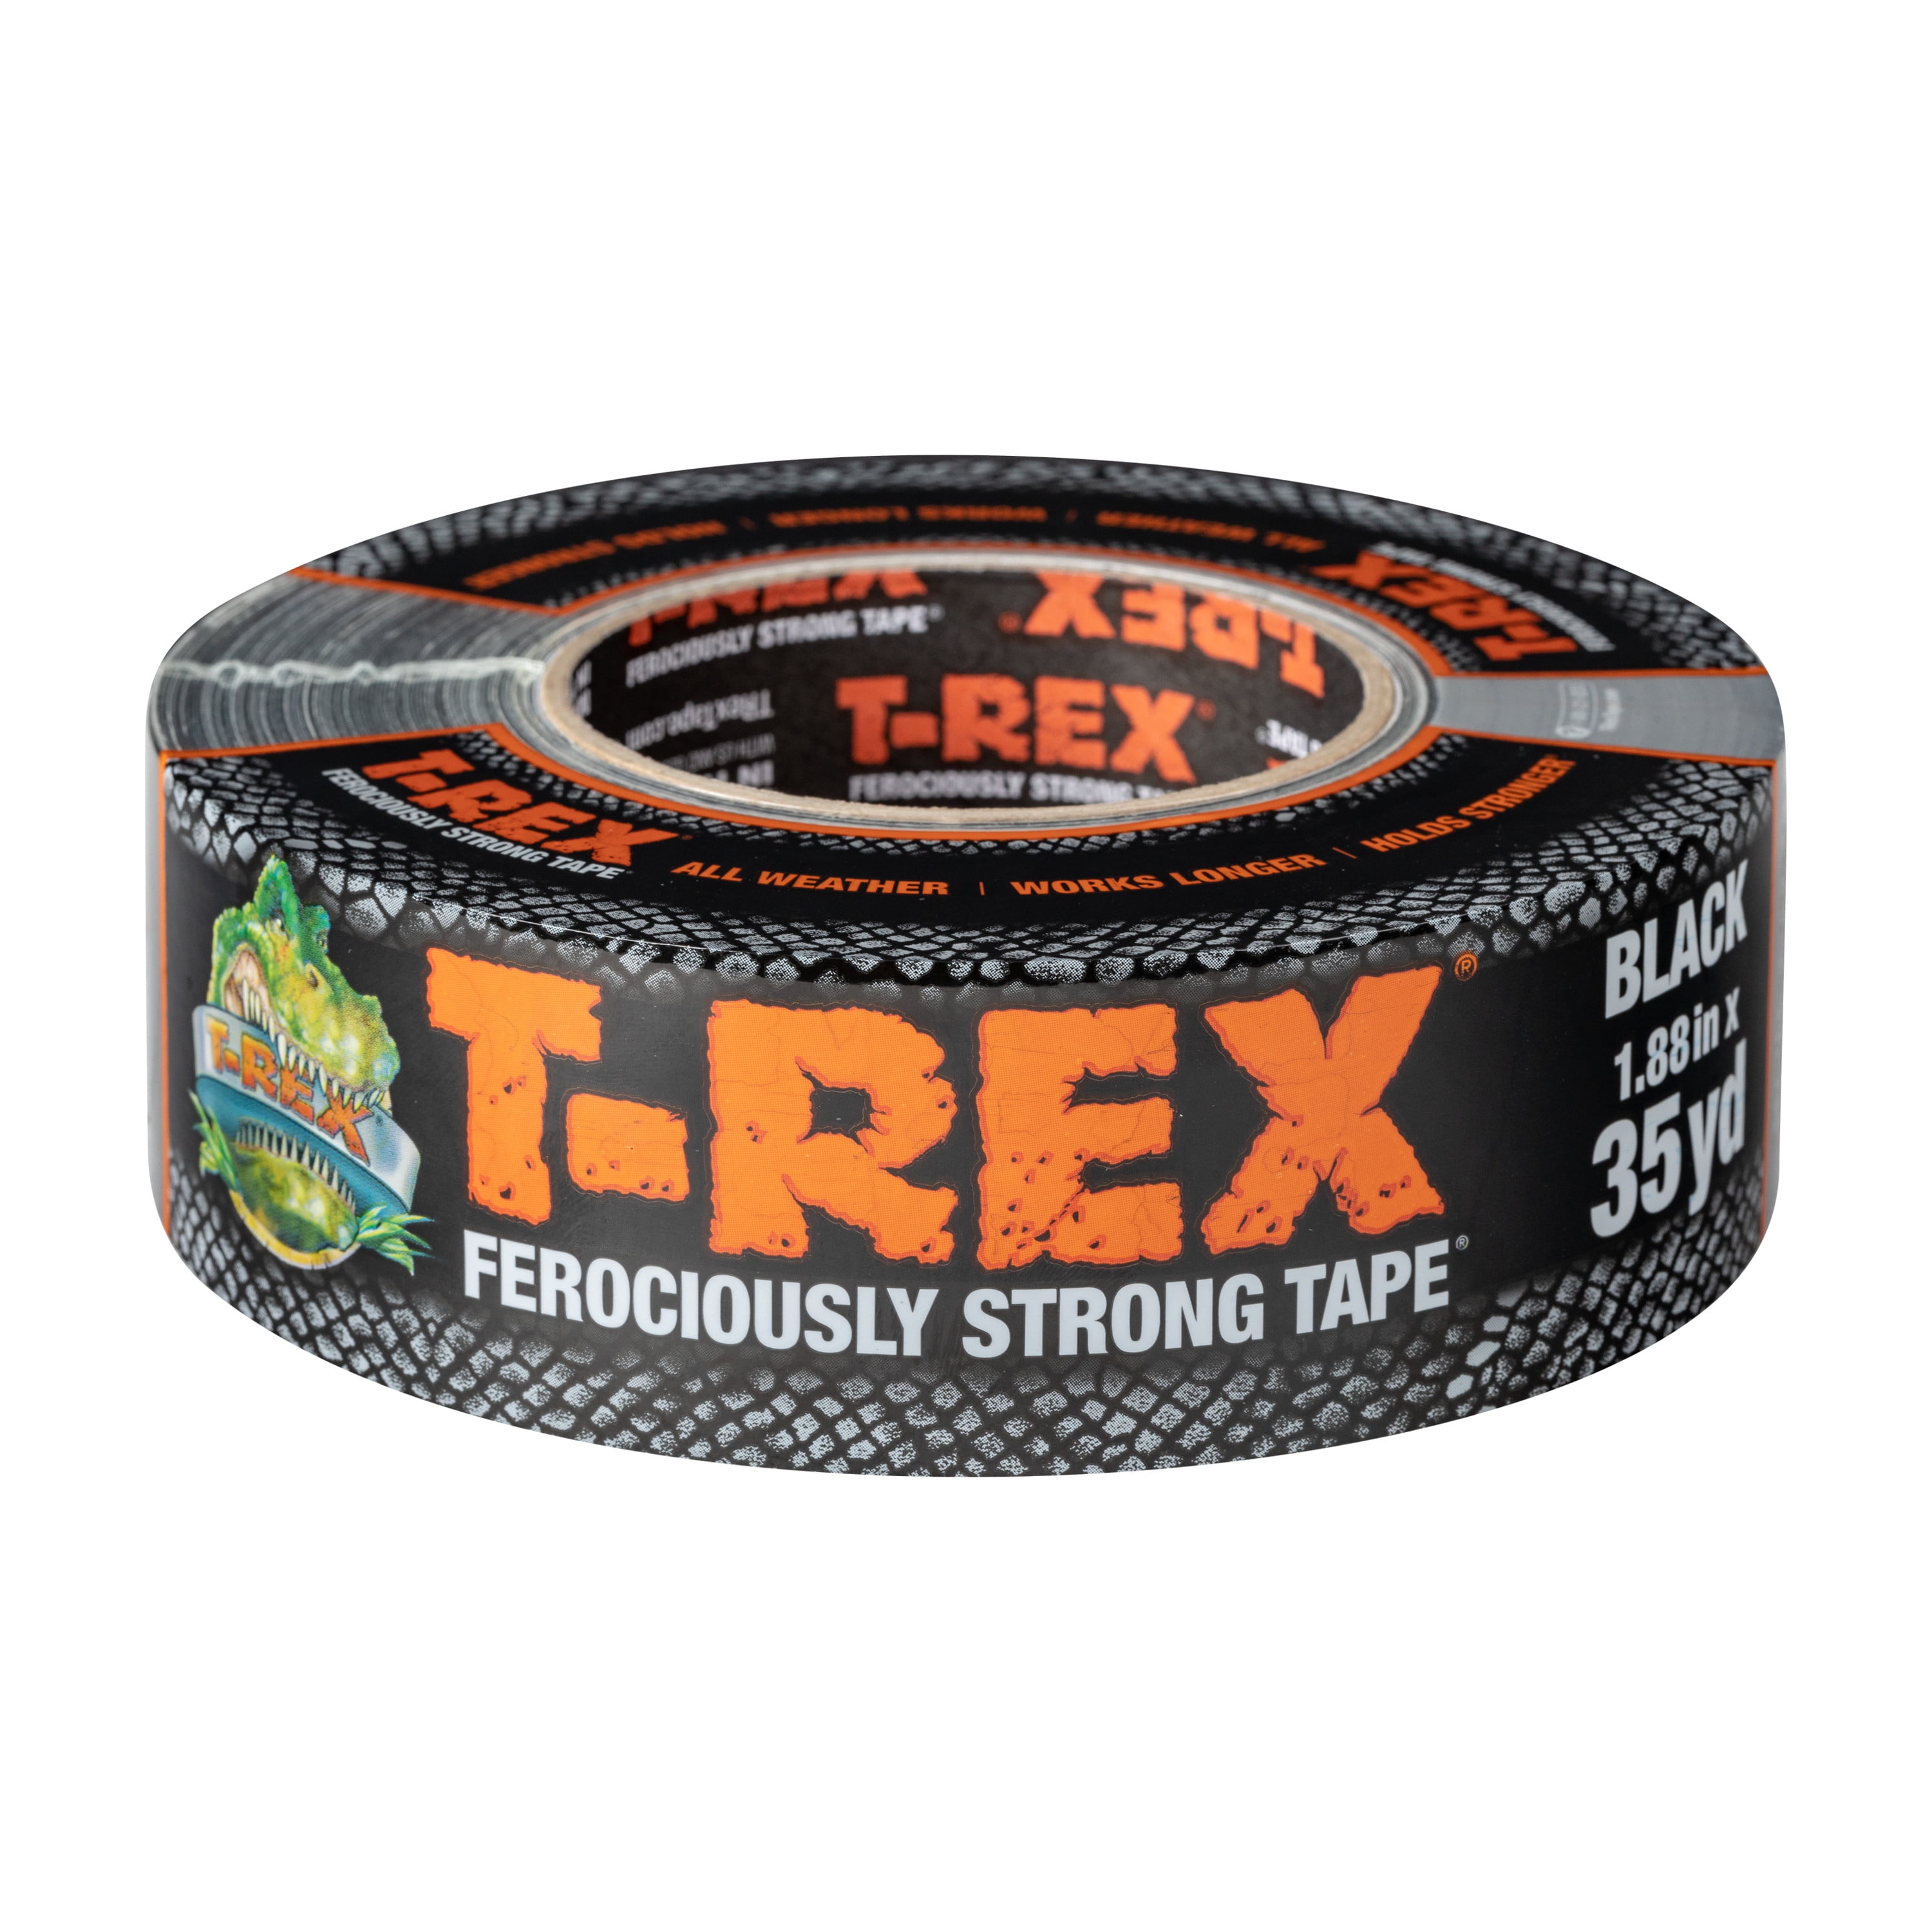 x 35 yd 1 Roll T-Rex Ferociously Strong Duct Tape 1.88 in Dark Gunmetal Gray 